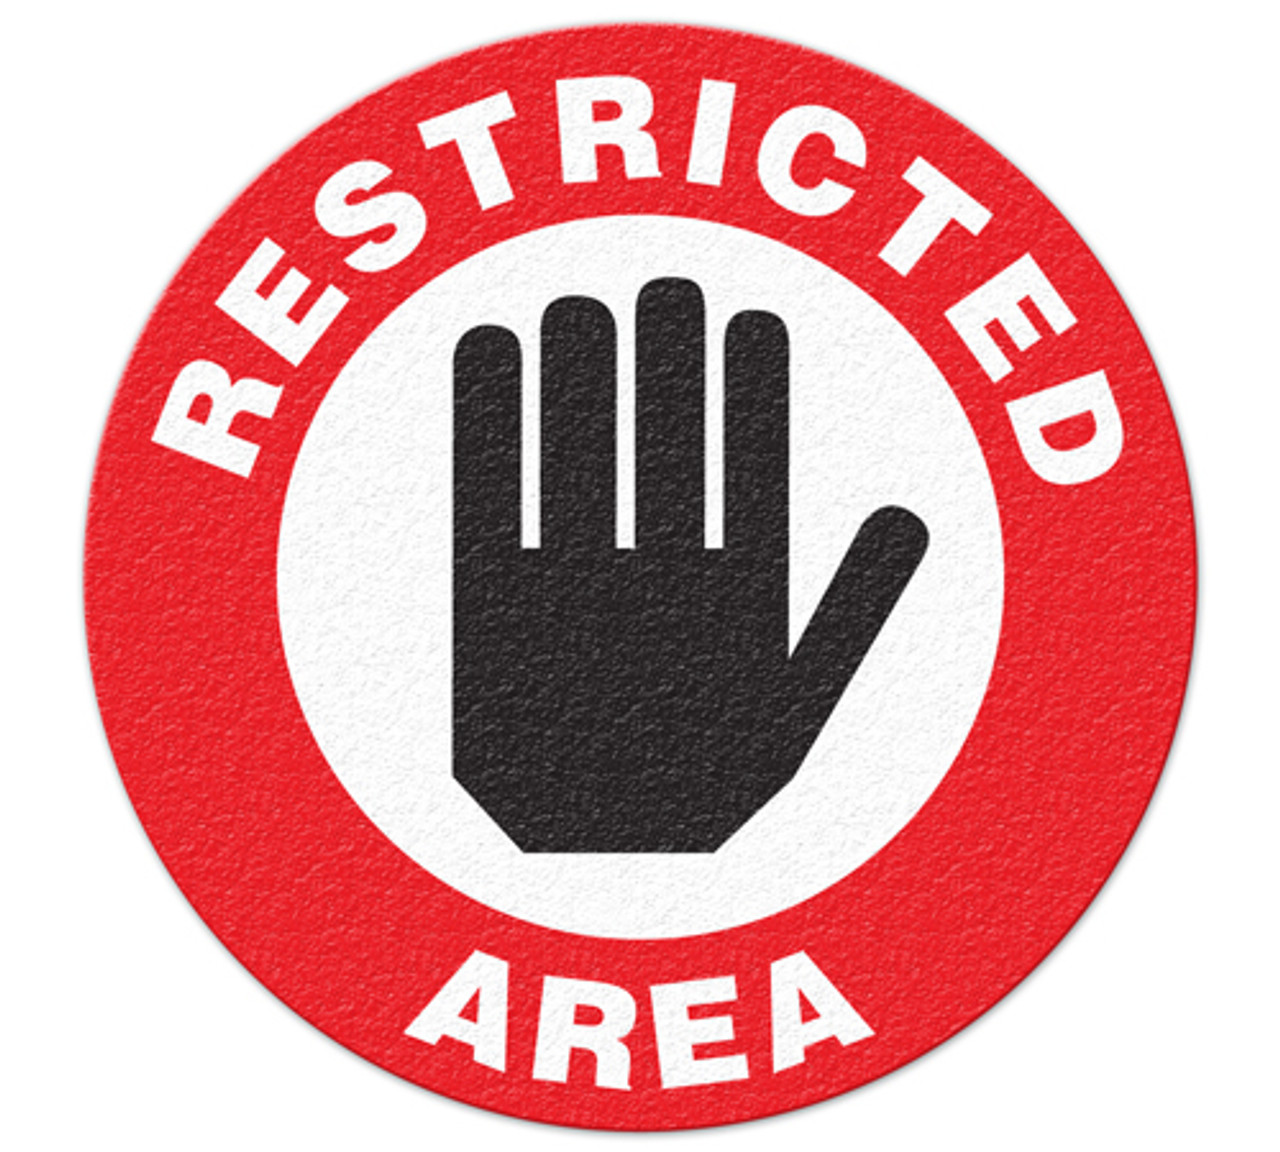 "Restricted Area" 17" Floor Marking Sign